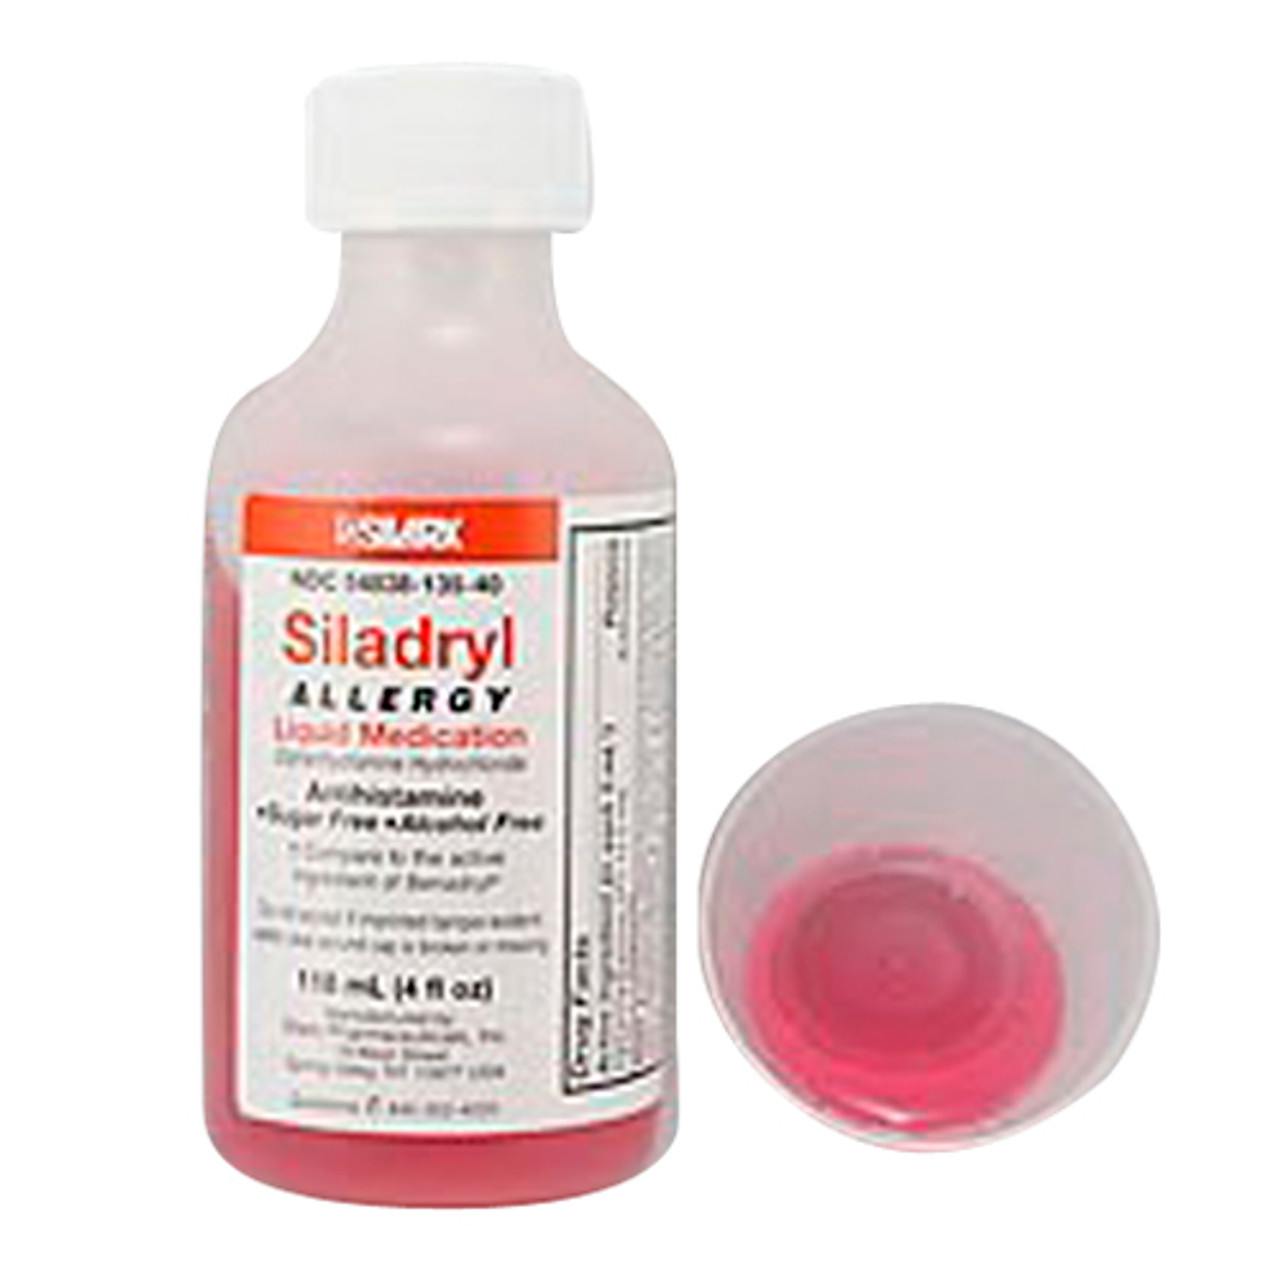 Silarx Siladryl Allergy Relief Liquid Medication Antihistamine, 4